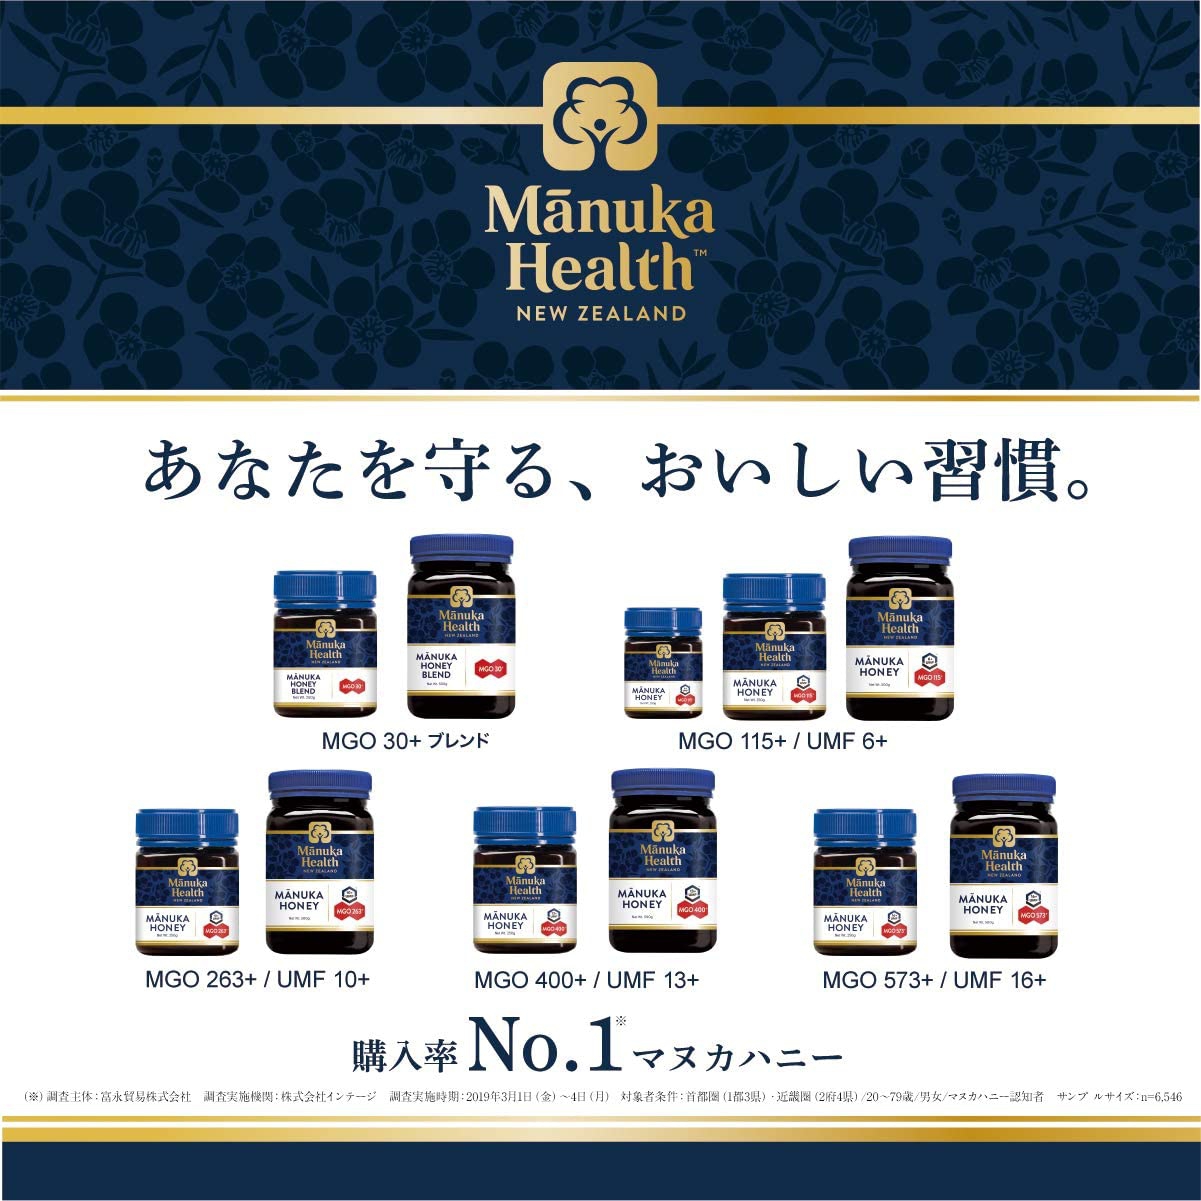 Manuka Health(マヌカへルス) MGO 400+ Manuka Honeyの商品画像11 